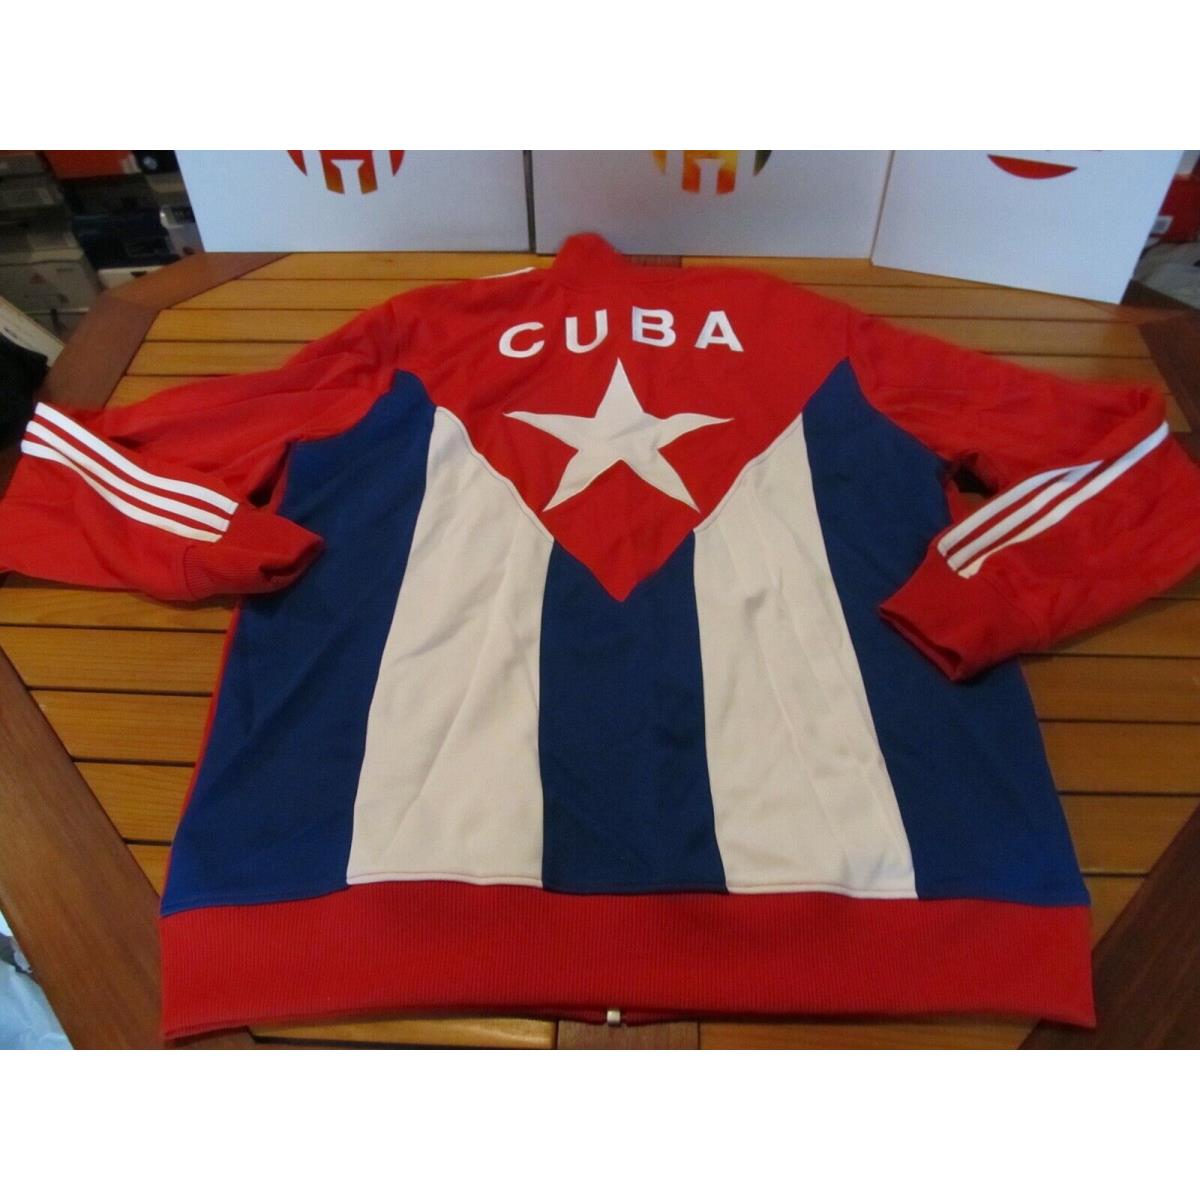 Escarpado Gracias Ir al circuito Adidas Originals Cuba TT Track Jacket Trefoil Red Blue XL 232235 Soccer |  692740378053 - Adidas clothing Cuba - Red | SporTipTop